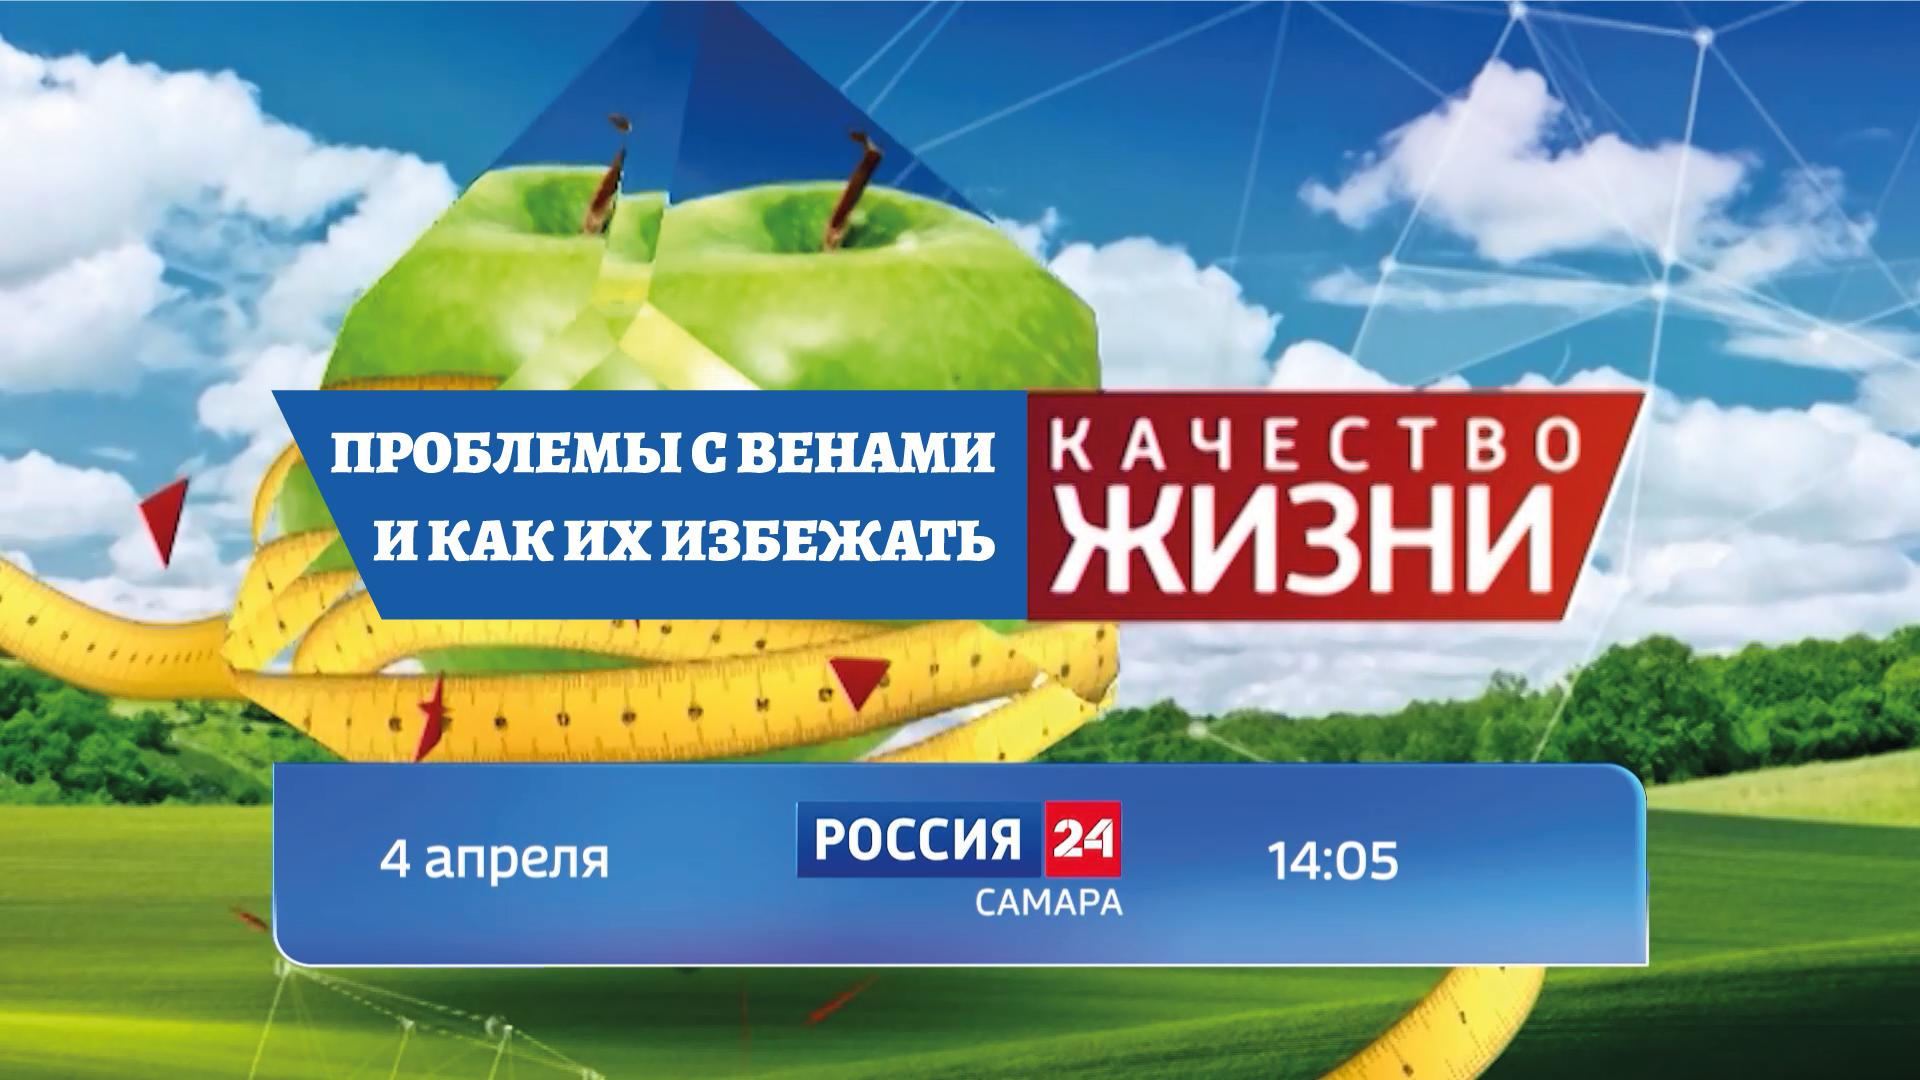 Качество жизни 4 апреля в 14:05 на канале Россия 24 